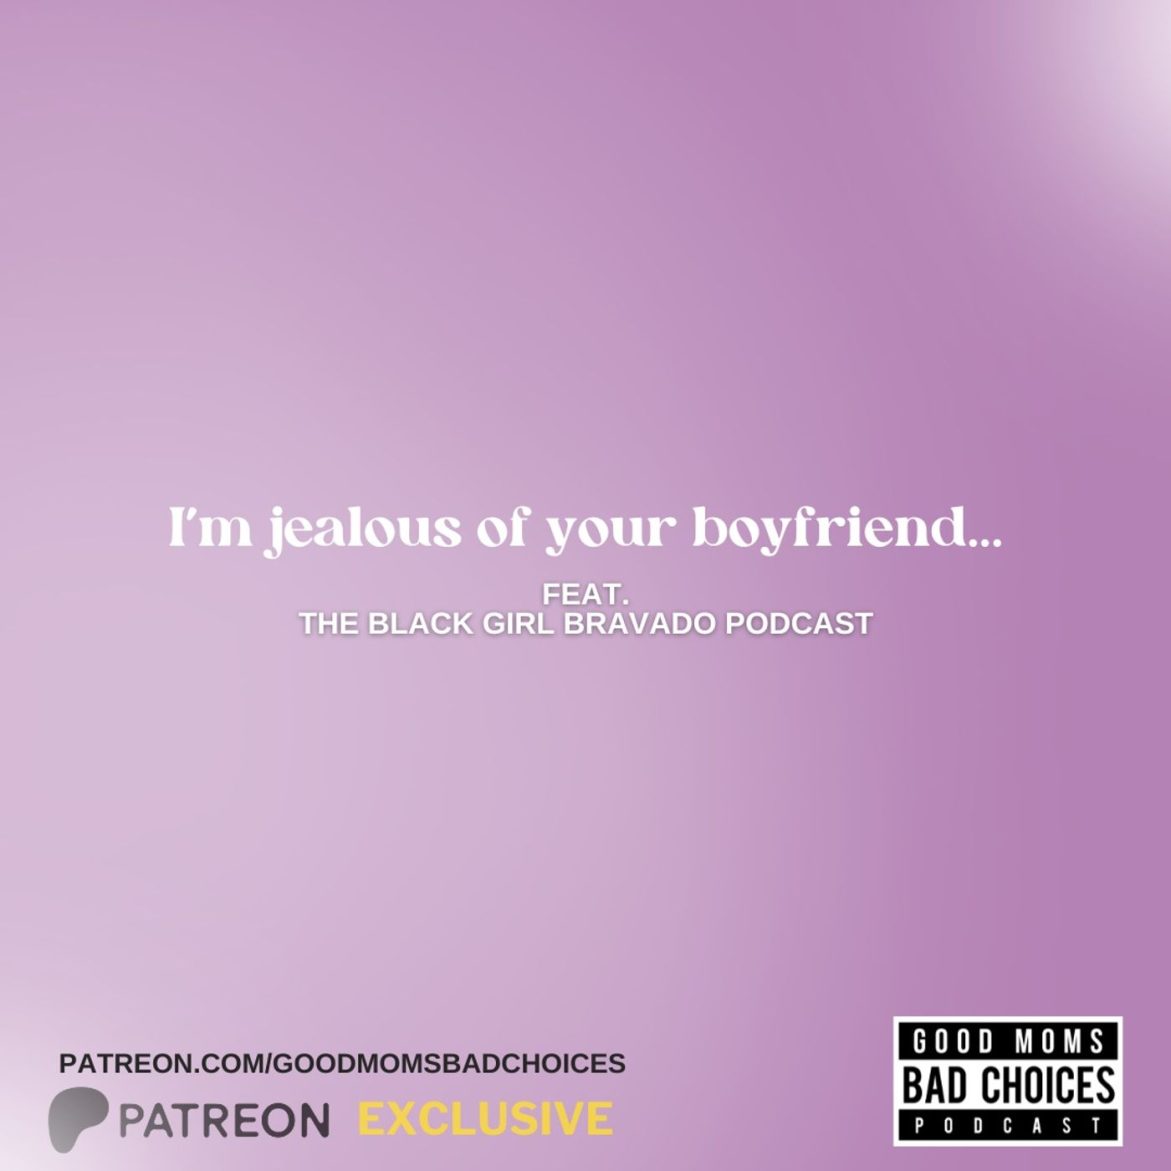 Black Podcasting - I'm Jealous of Your Boyfriend? Feat. The Black Girl Bravado